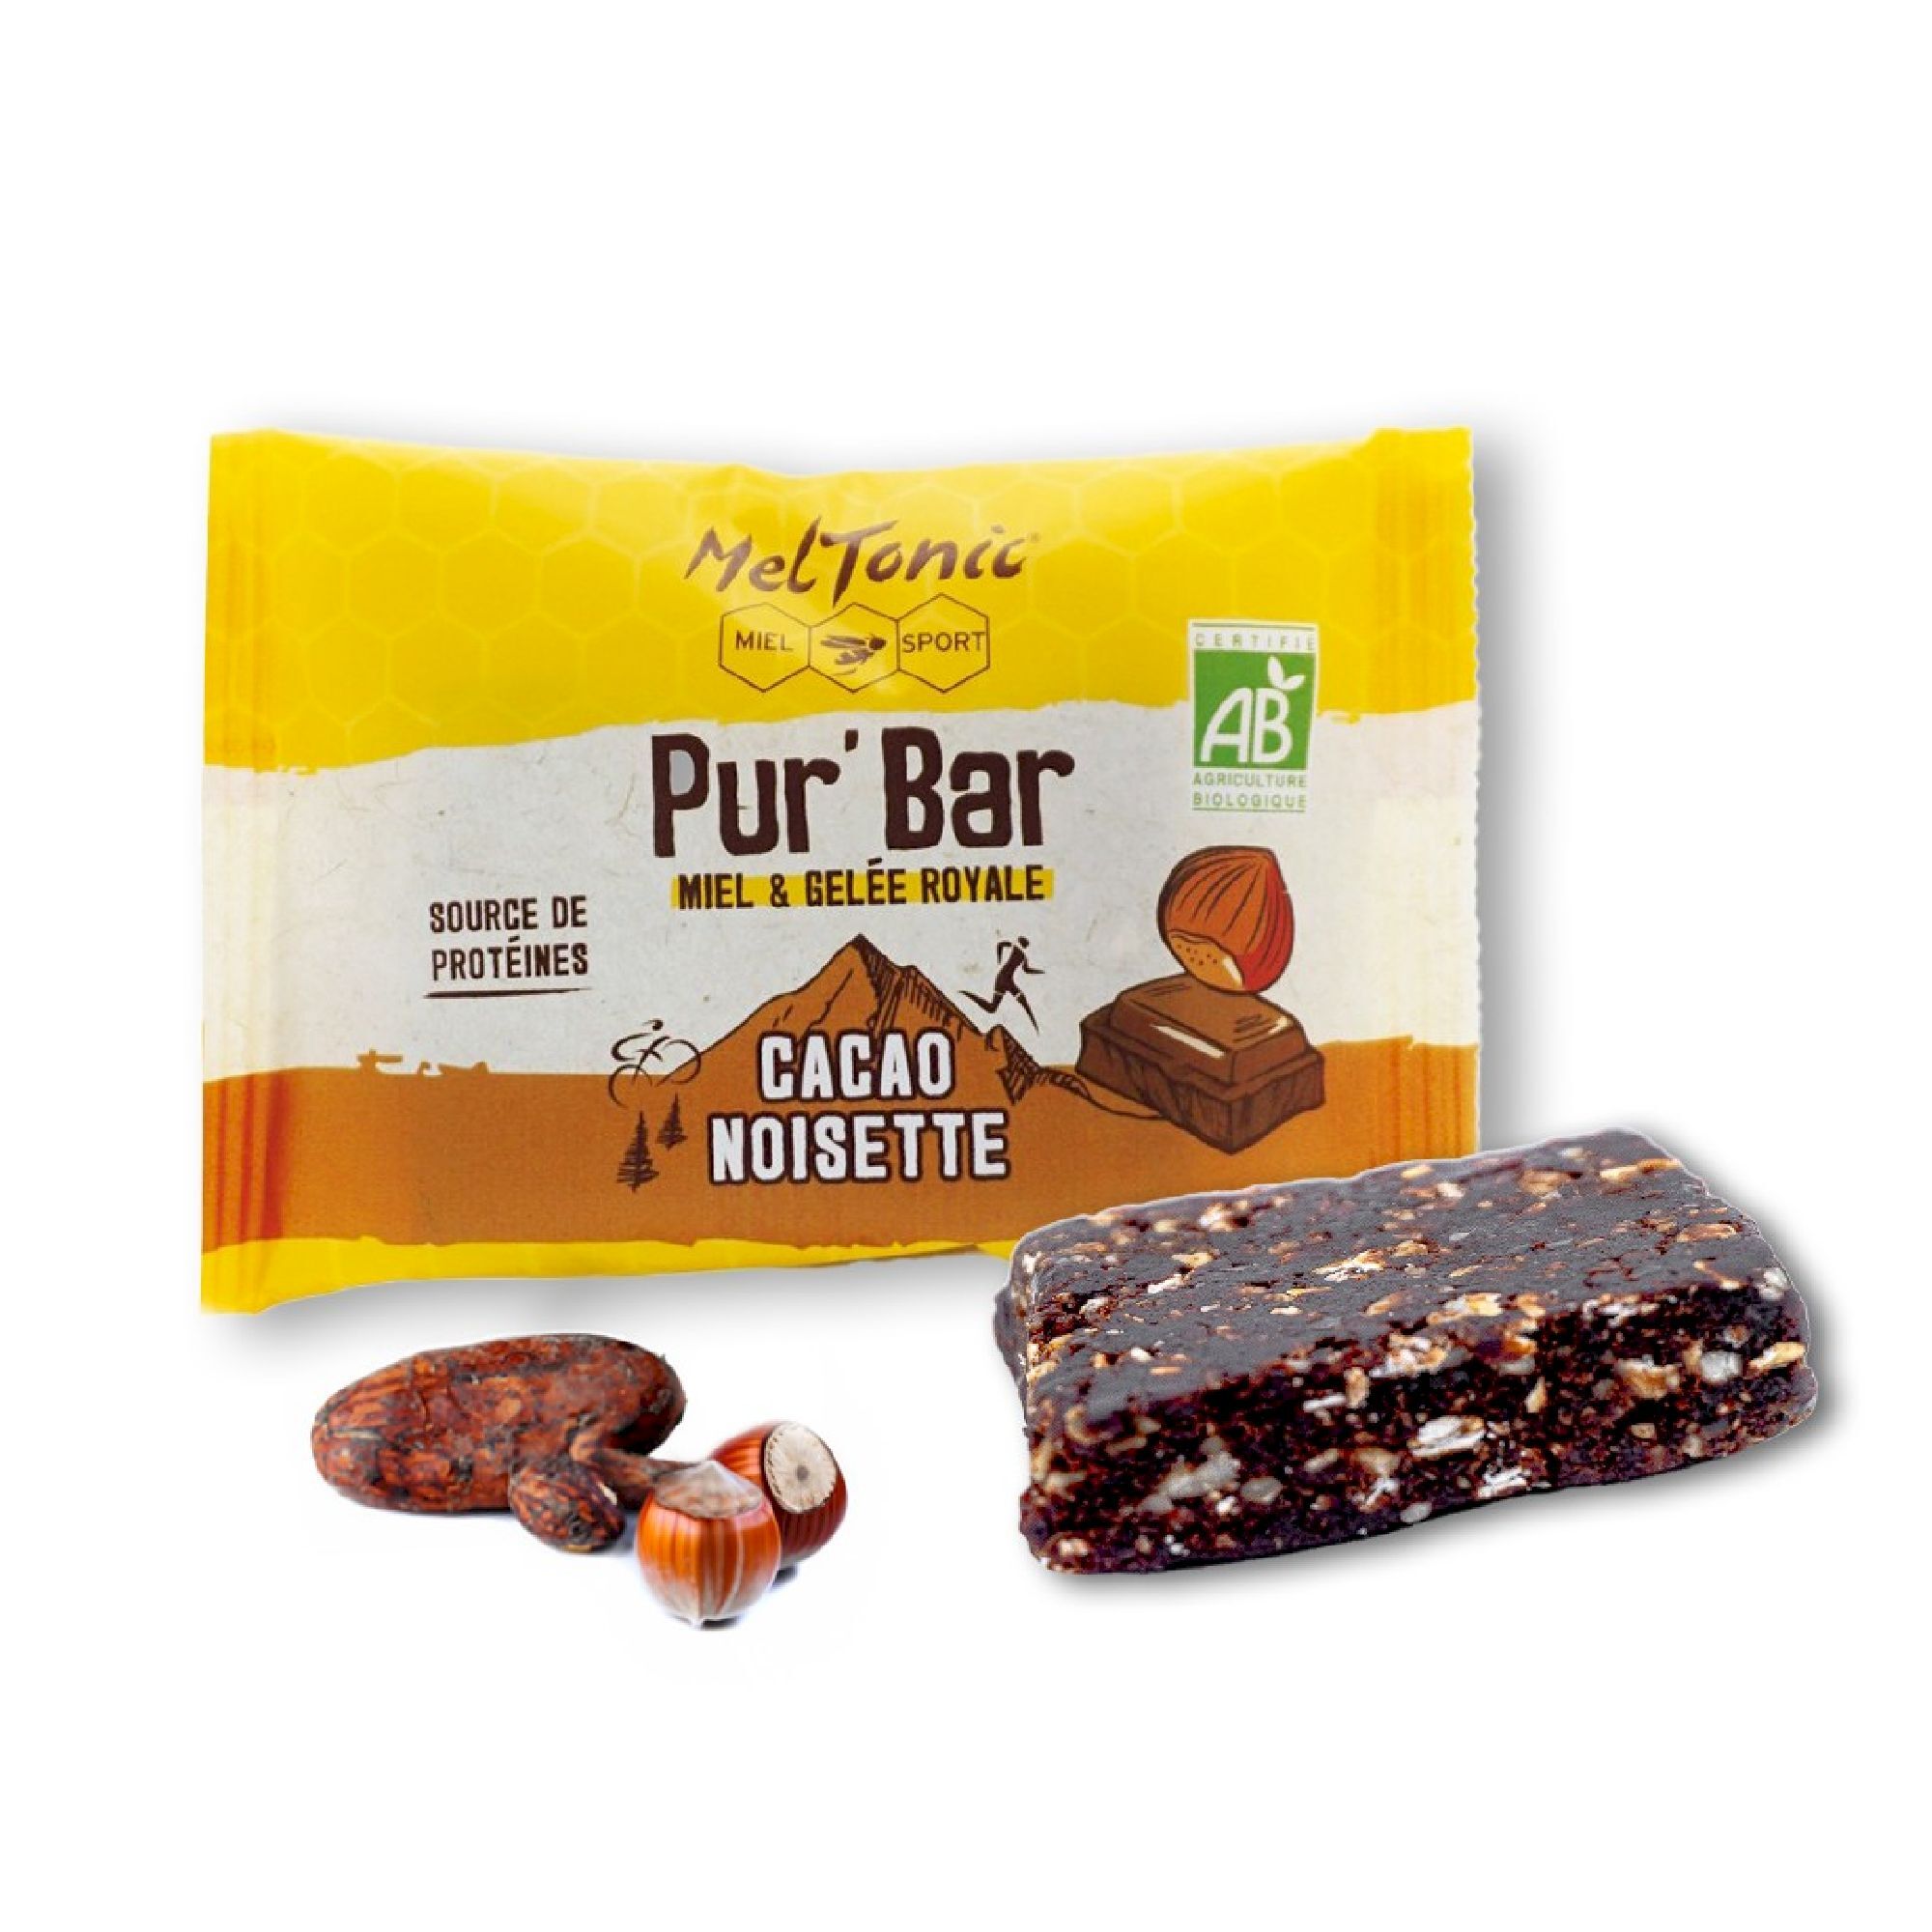 Meltonic Pur' Bar Bio Cacao Noisette Miel & Gelée Royale - Baton energetyczny | Hardloop